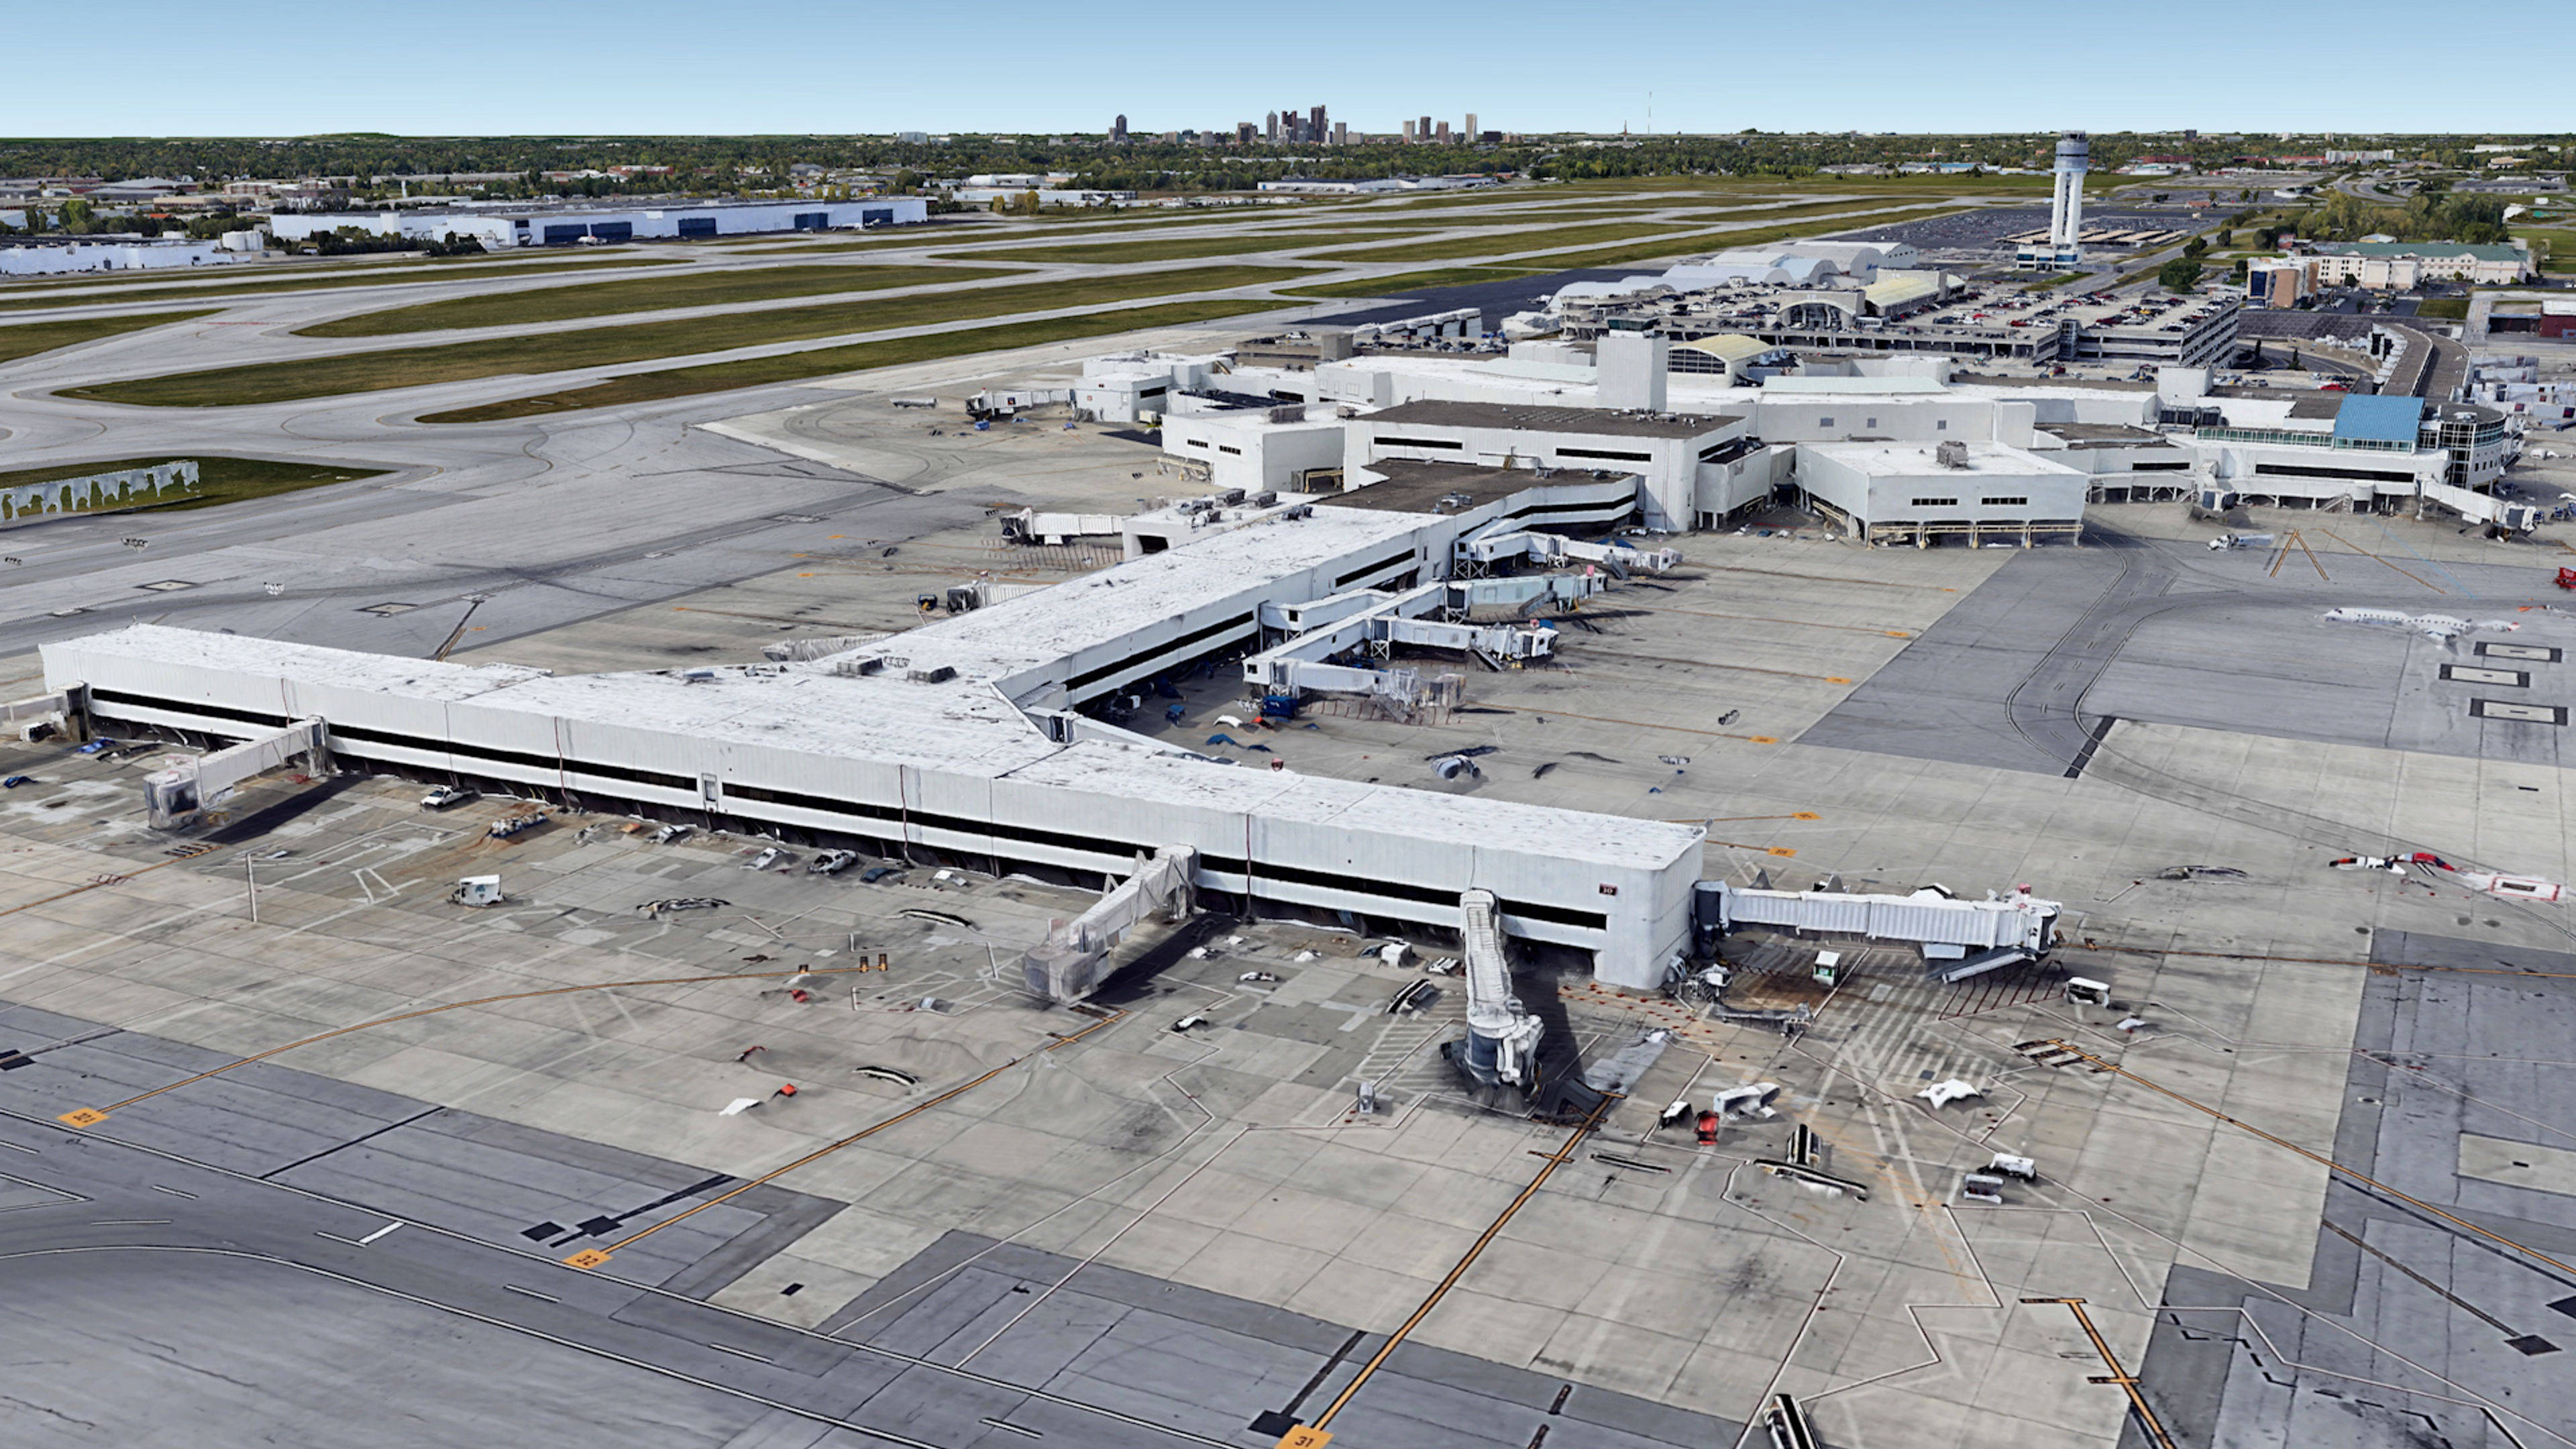 Aerial View of John Glenn Columbus Airport